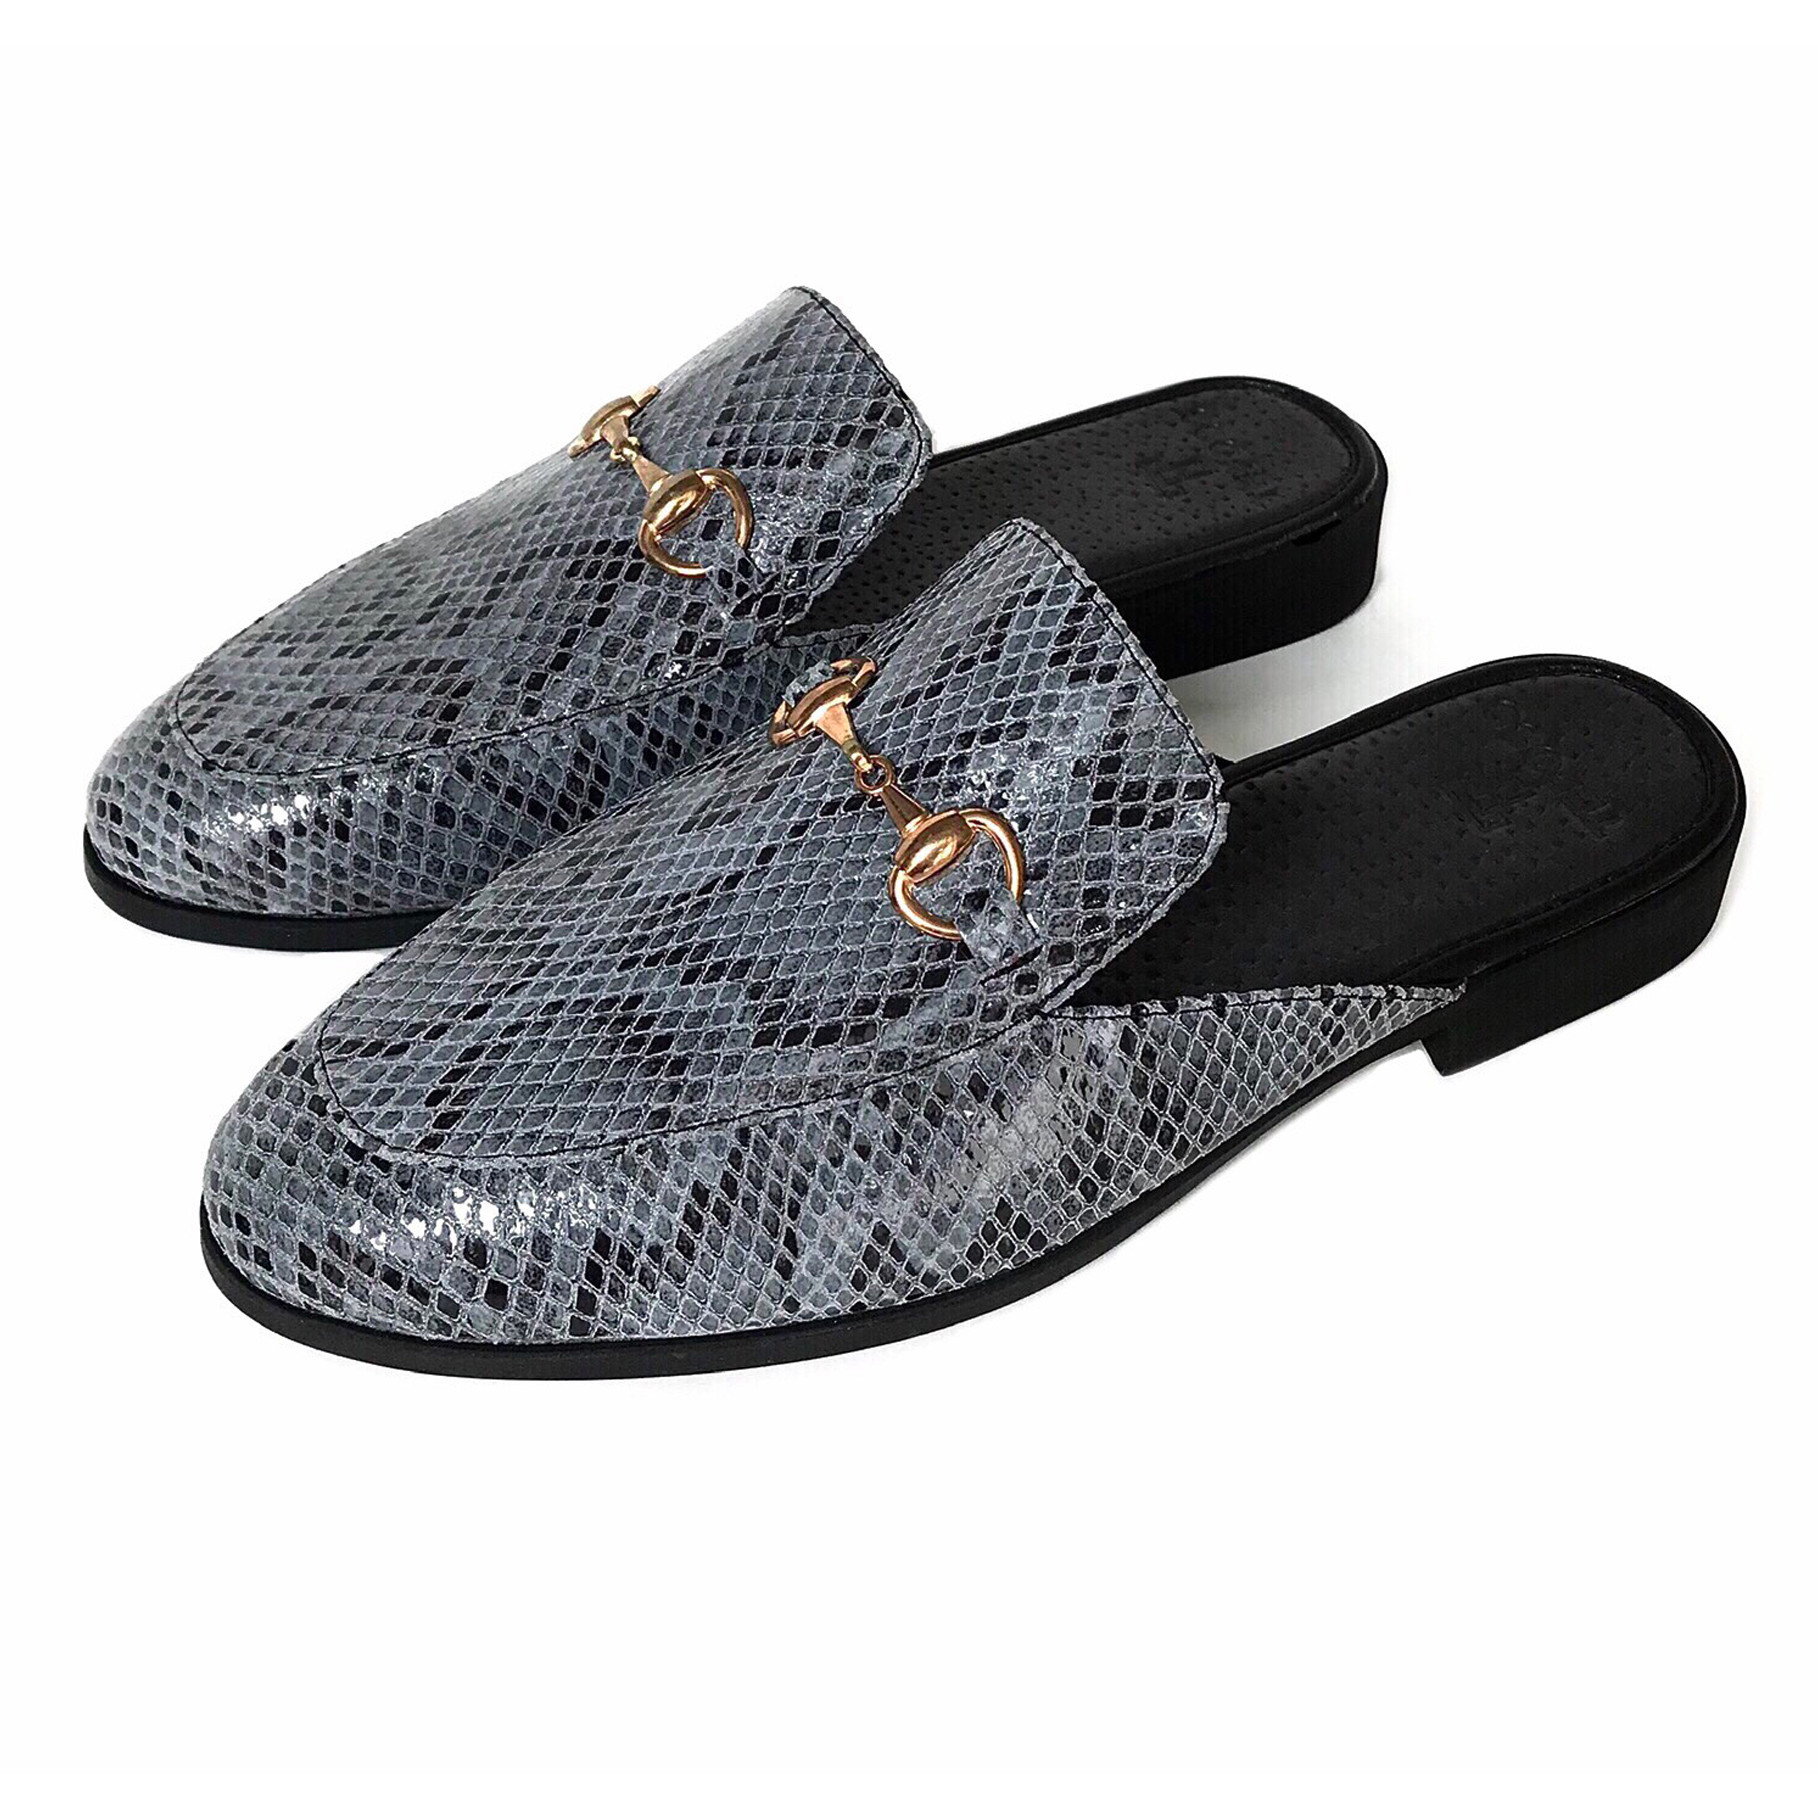 Giày Sục Nam Da Bò In Vân Da Rắn Mules Shoes TEFOSS HTSPECIAL Size 37 - 43